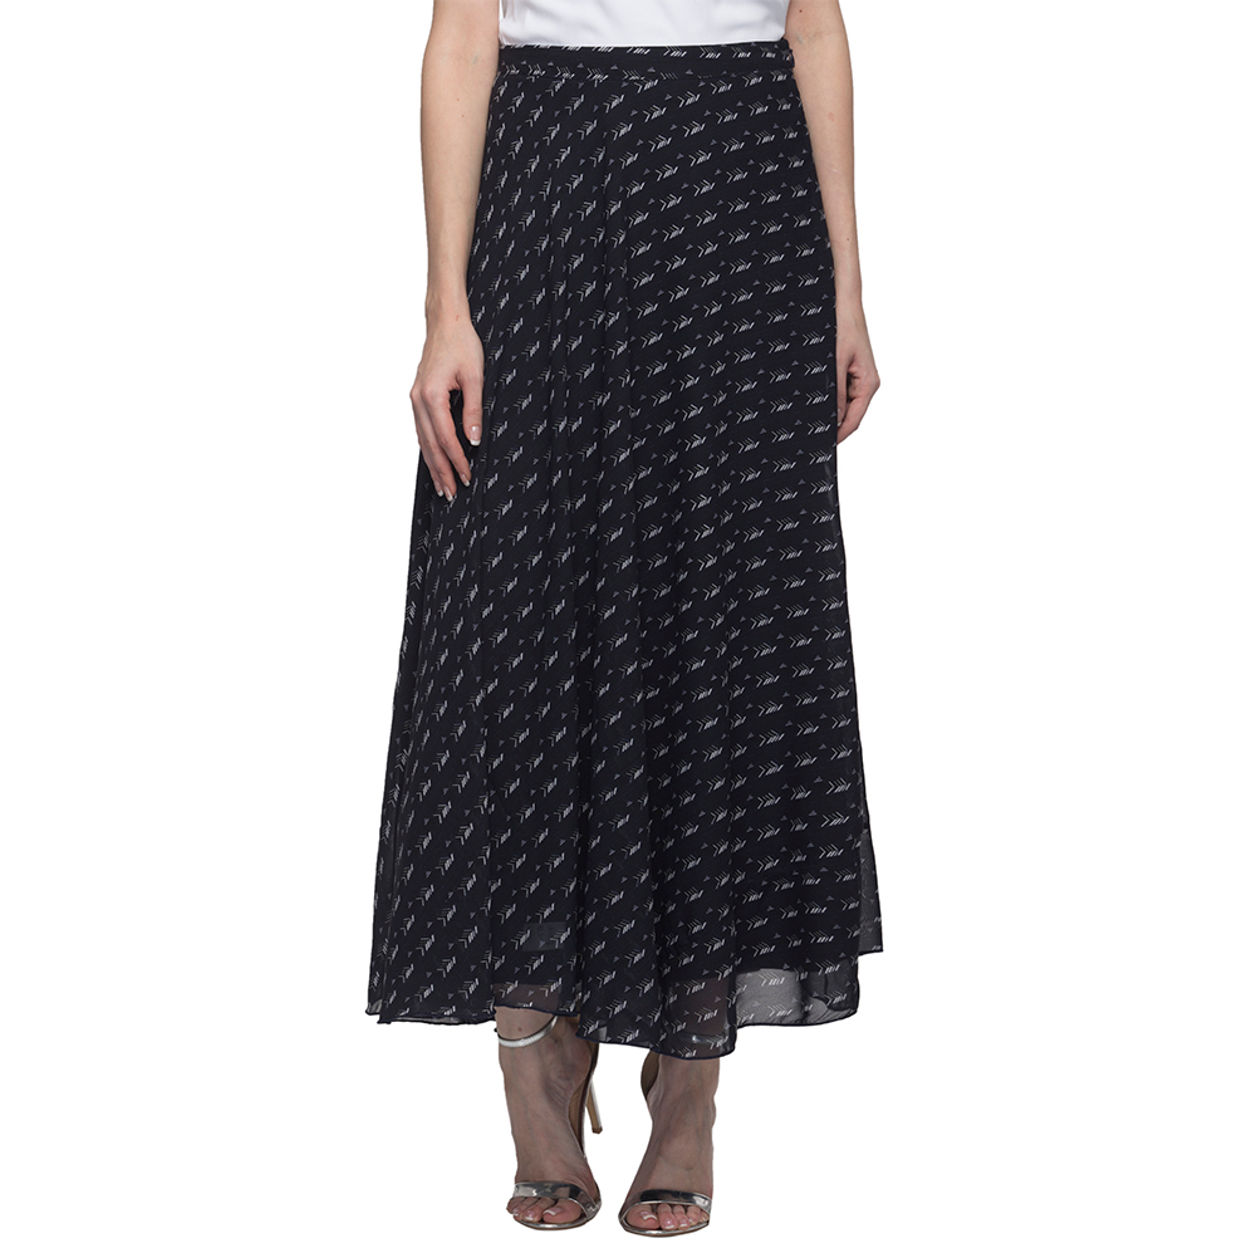 Buy Oxolloxo Women Printed Navy Blue Skirt | S17371wsk001 | Oxolloxo